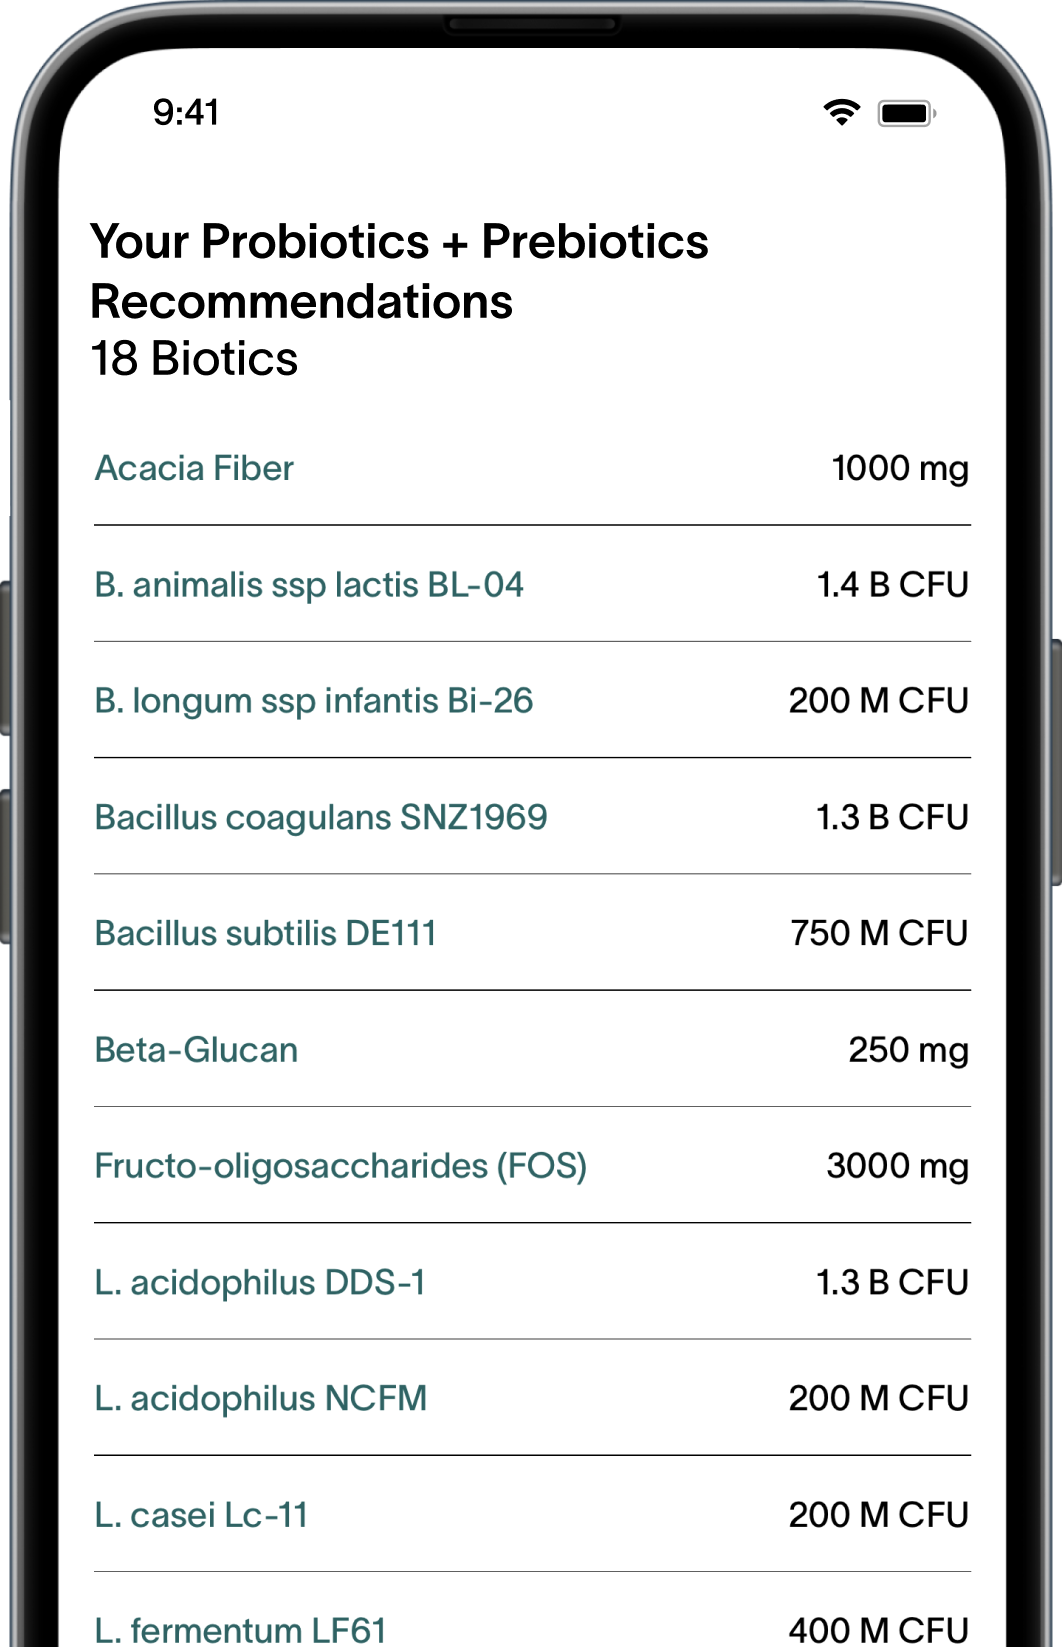 [Phone Screen] Viome App - Your Probiotics and Prebiotics Recommendations